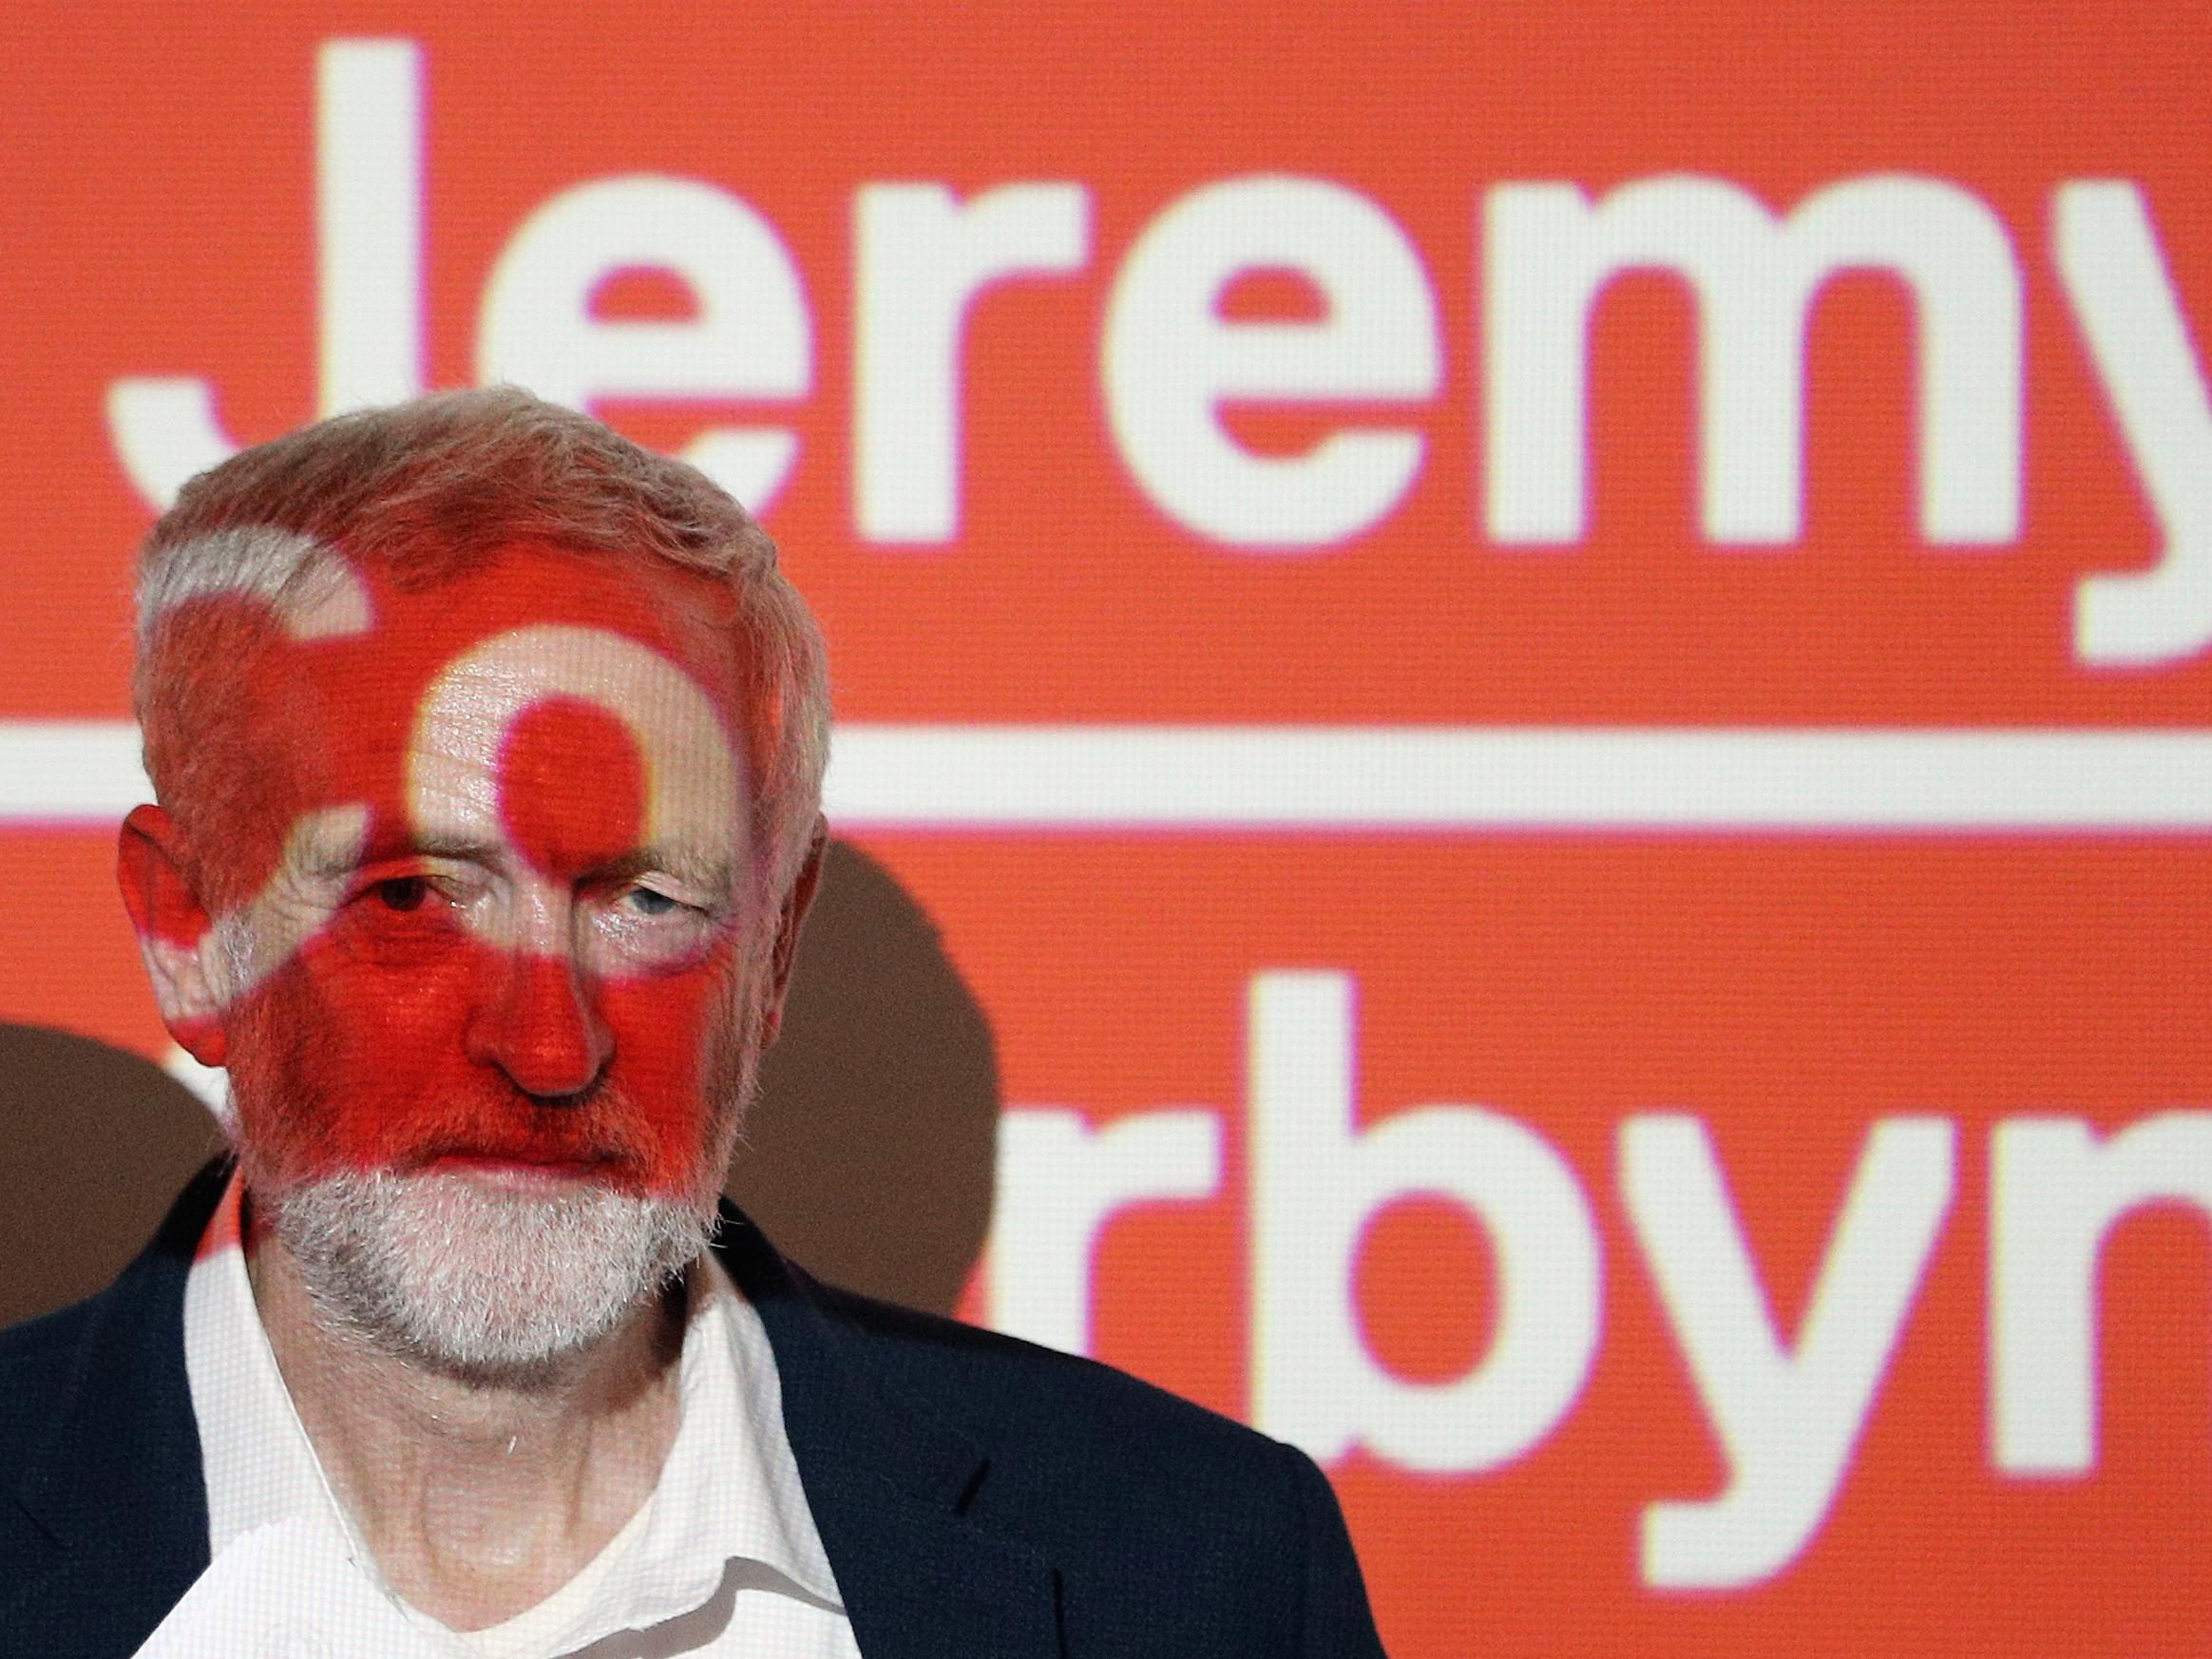 Labour leader Jeremy Corbyn